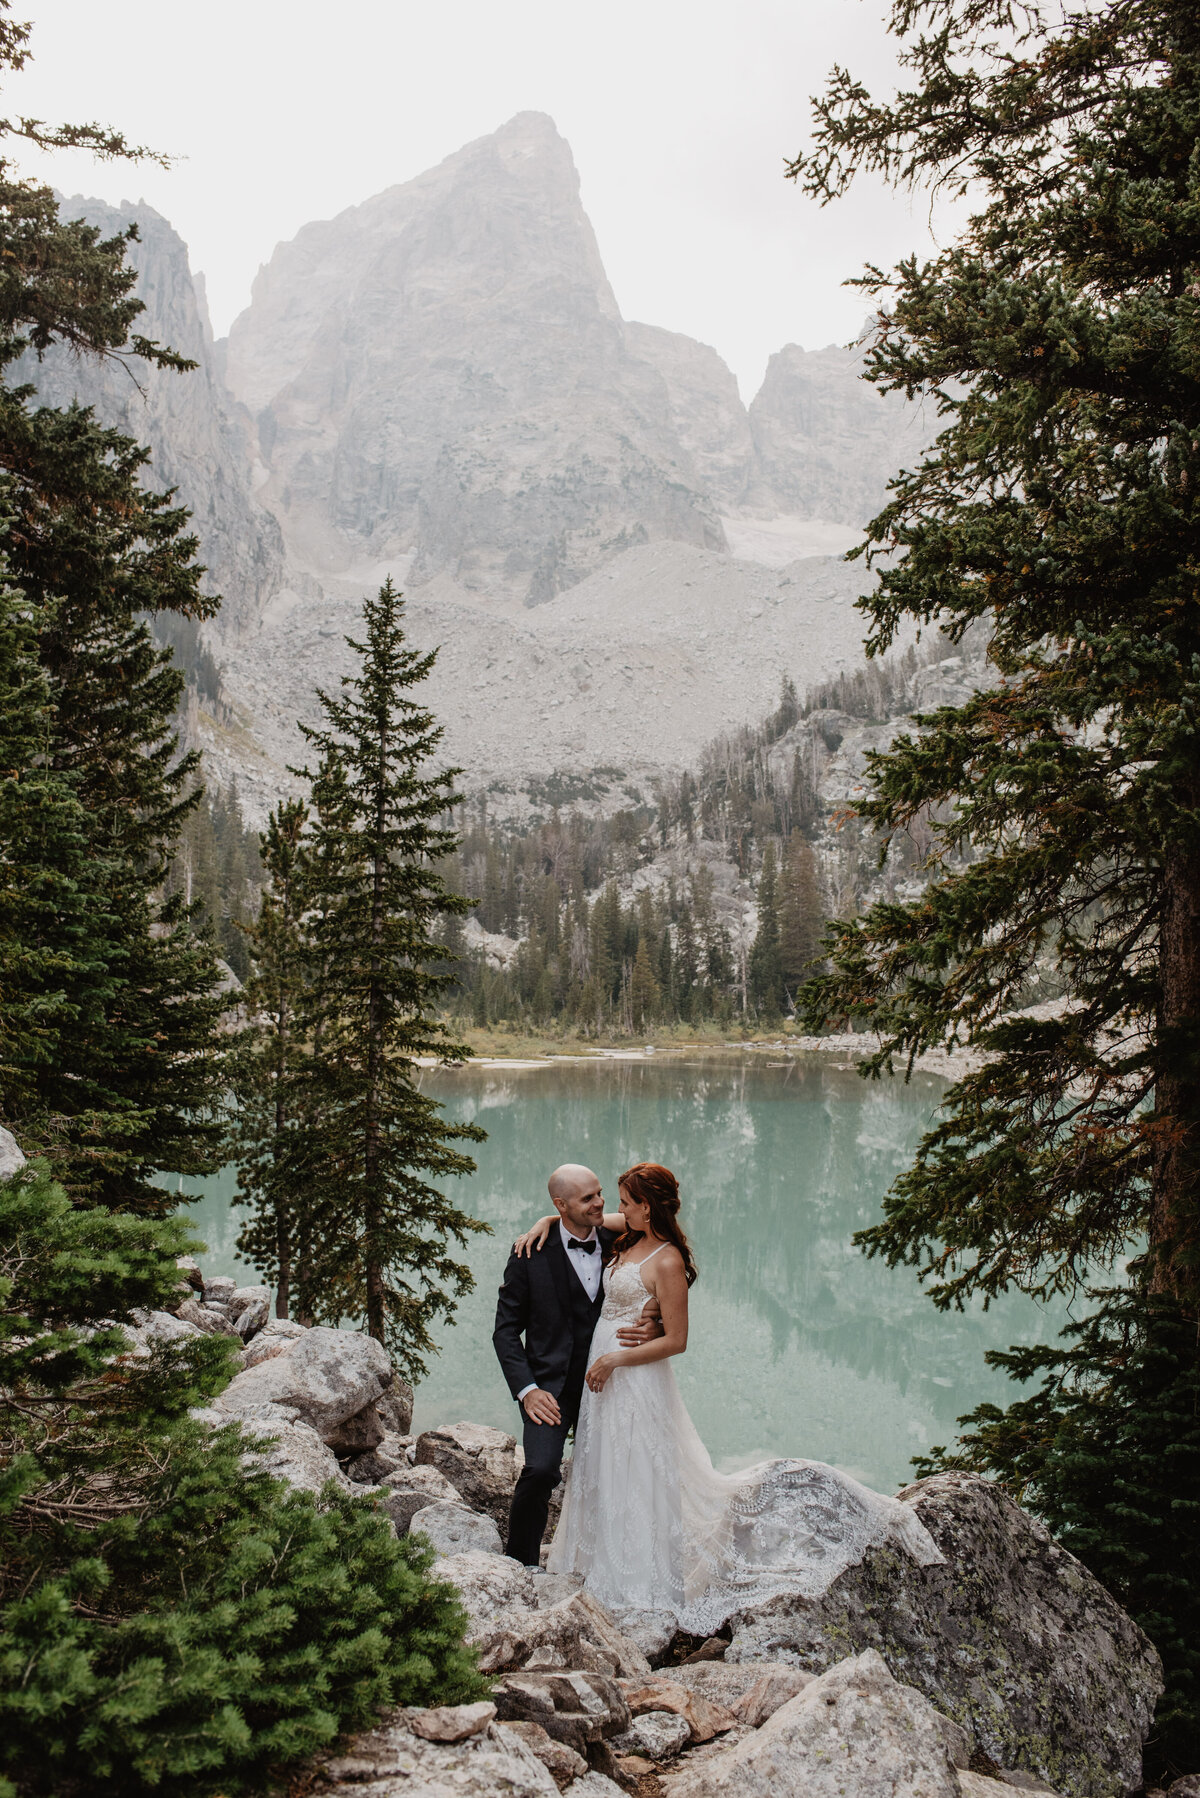 Jackson Hole Photographers capture bride and groom portraits